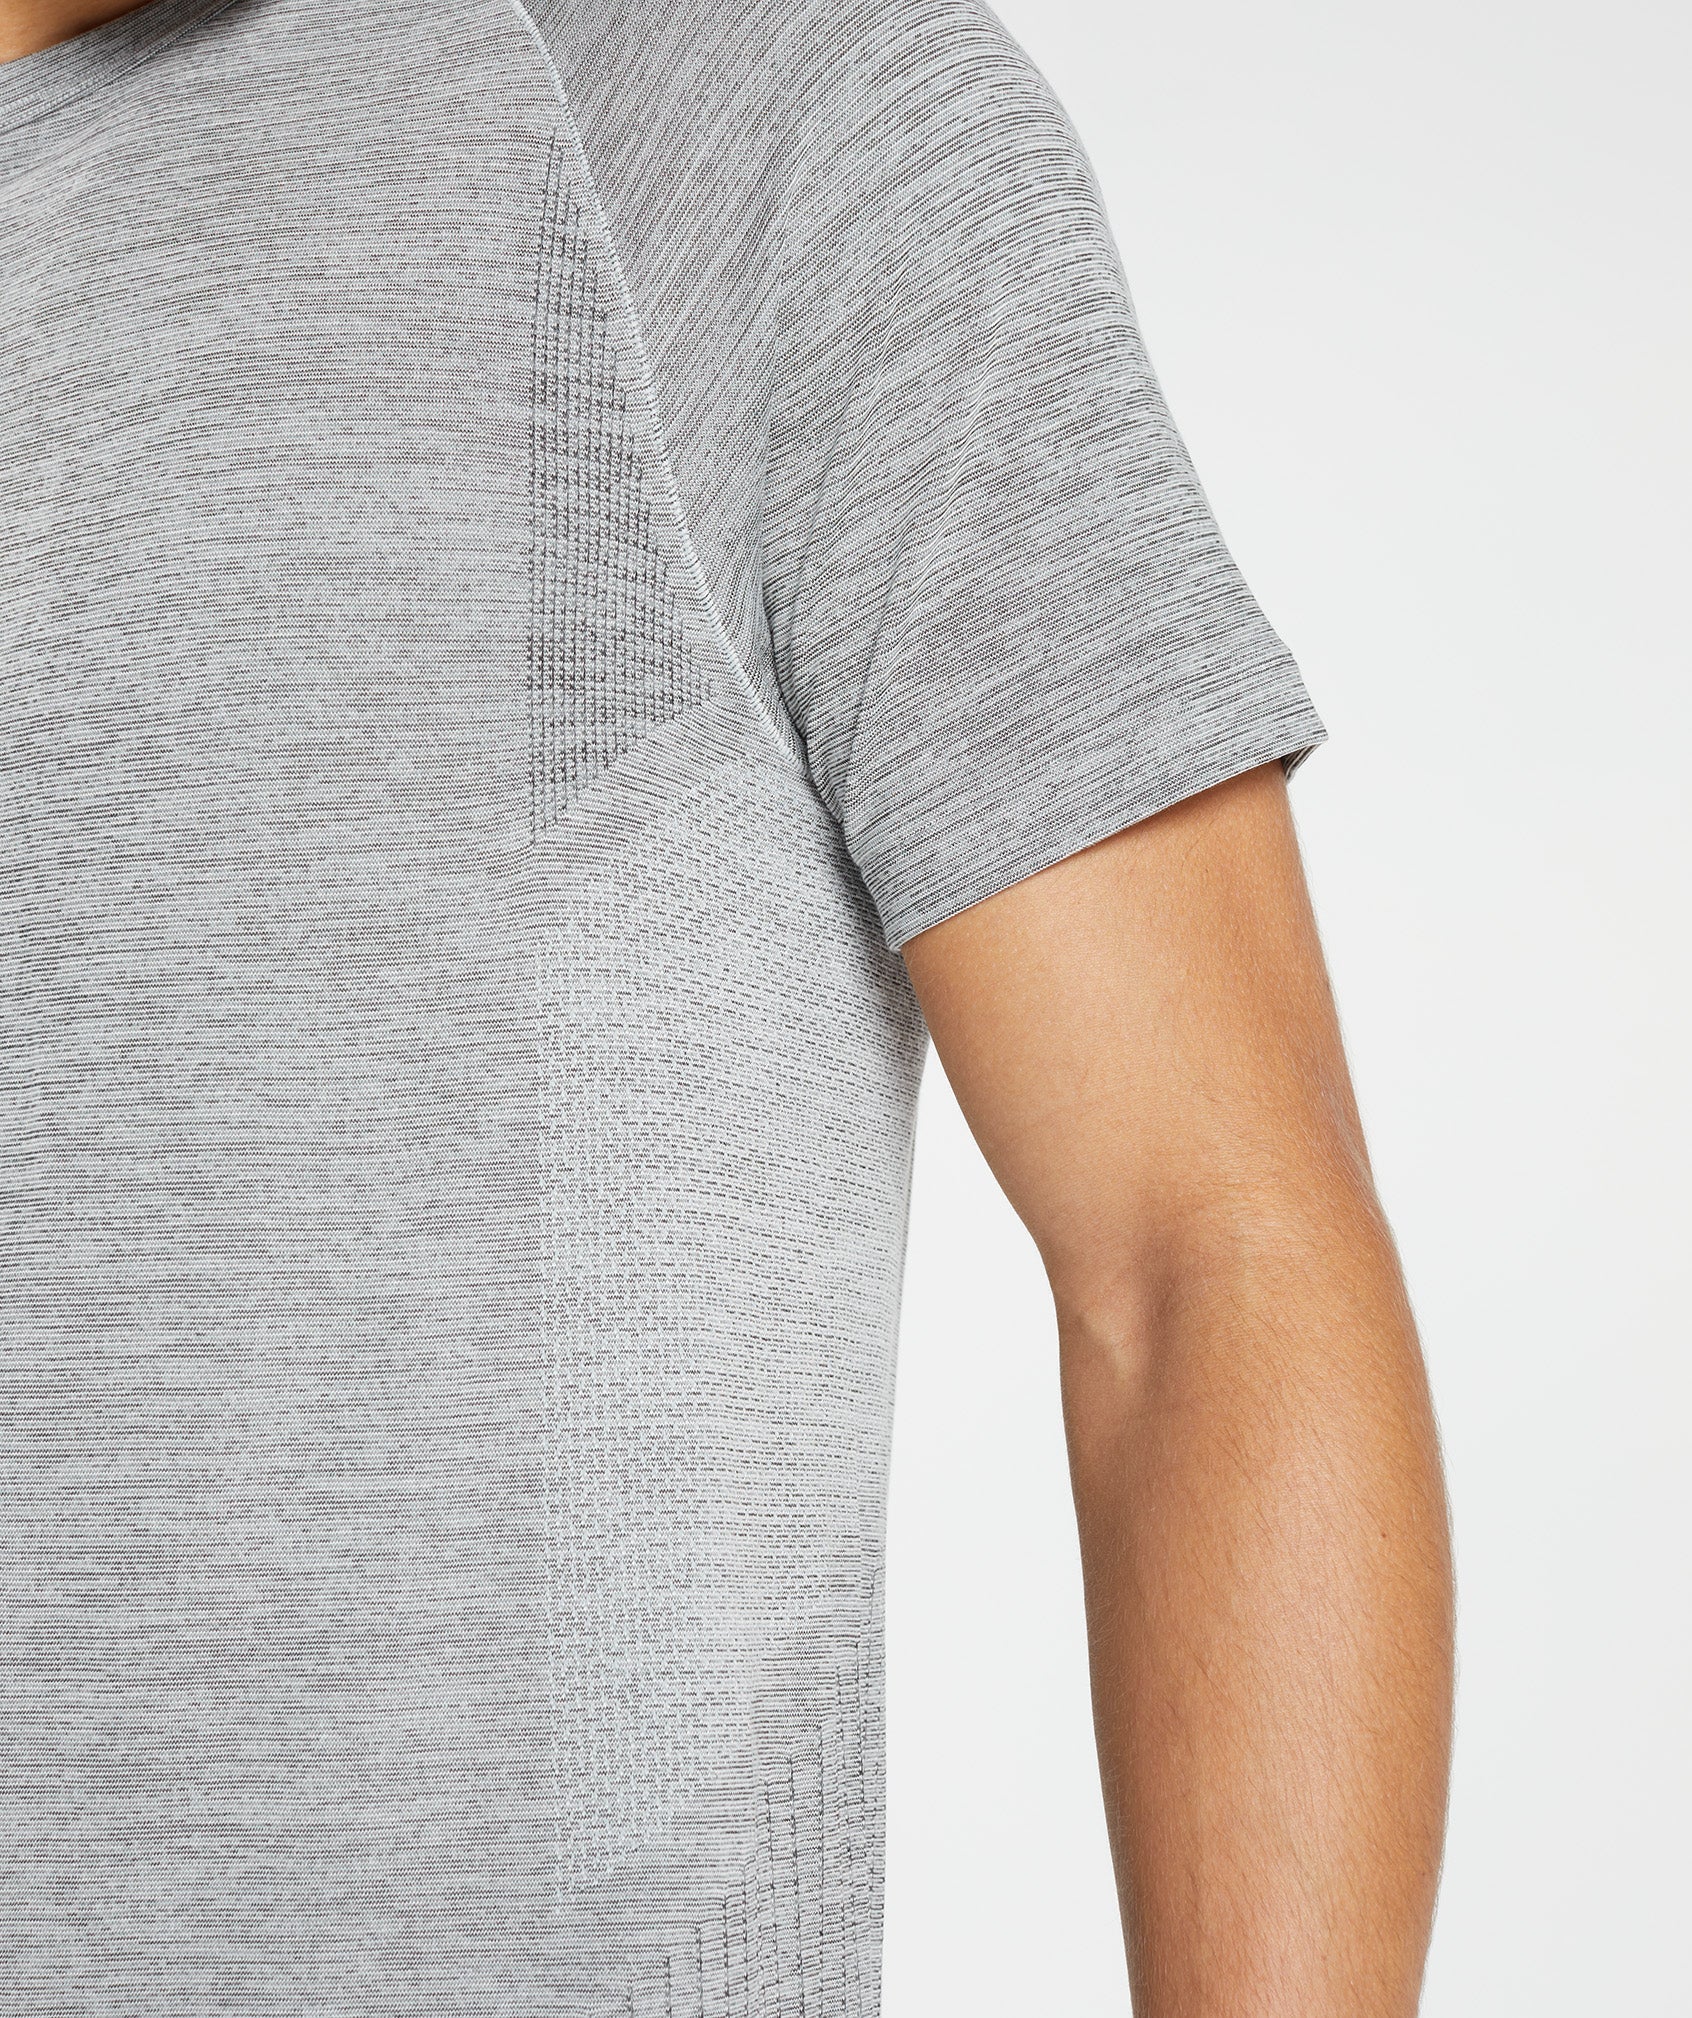 Retake Seamless T-Shirt in Light Grey/Black Marl